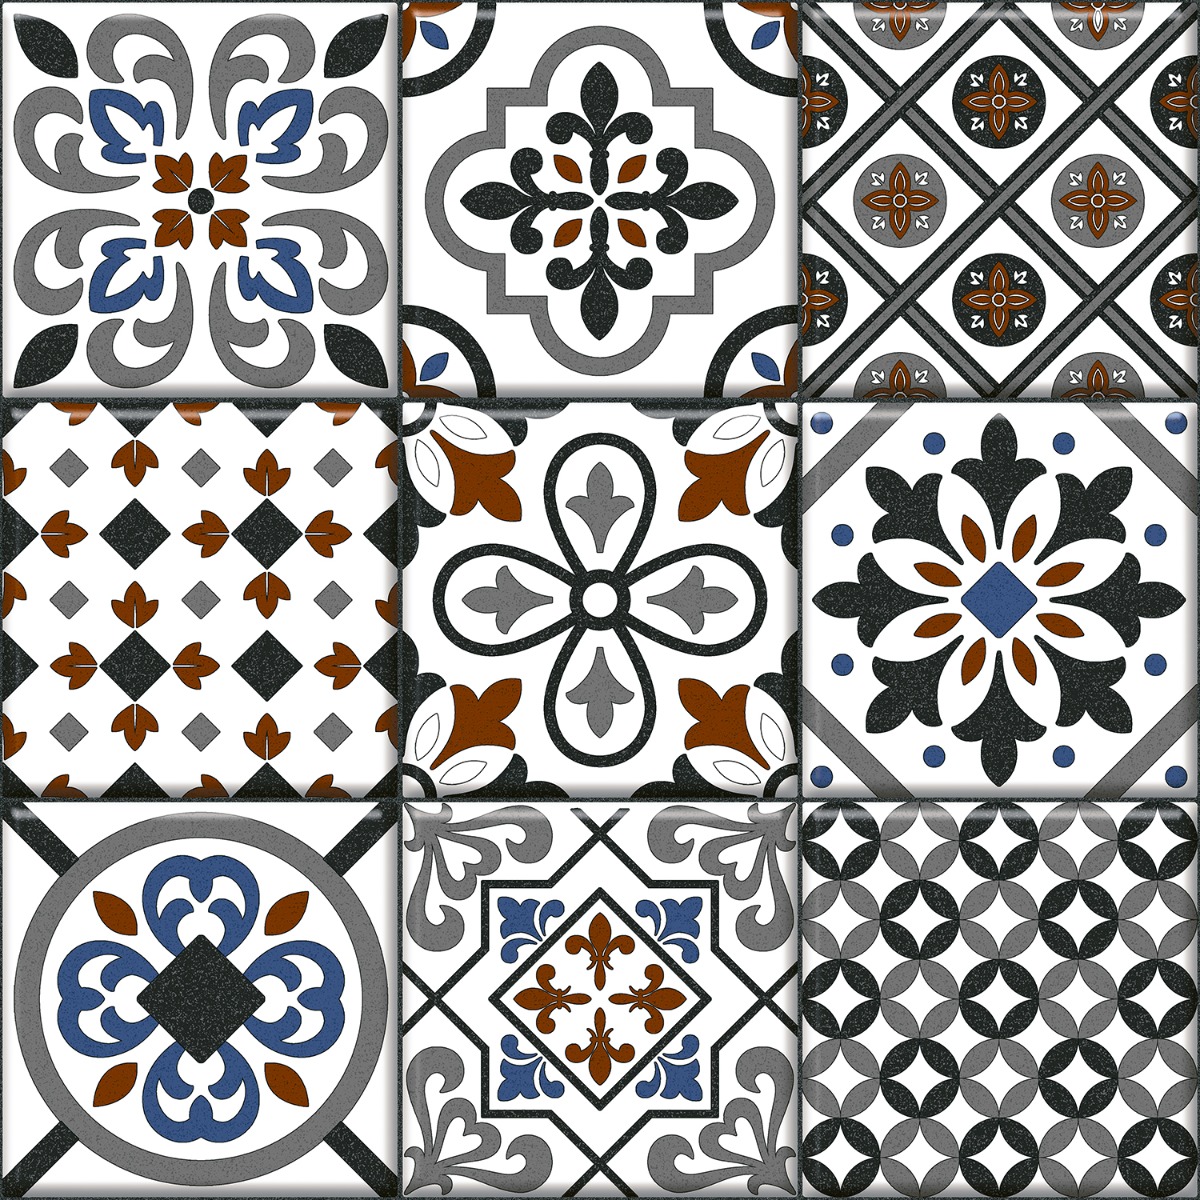 Black Tiles for Bathroom Tiles, Balcony Tiles, Hospital Tiles, Bar/Restaurant, Commercial/Office, Outdoor/Terrace